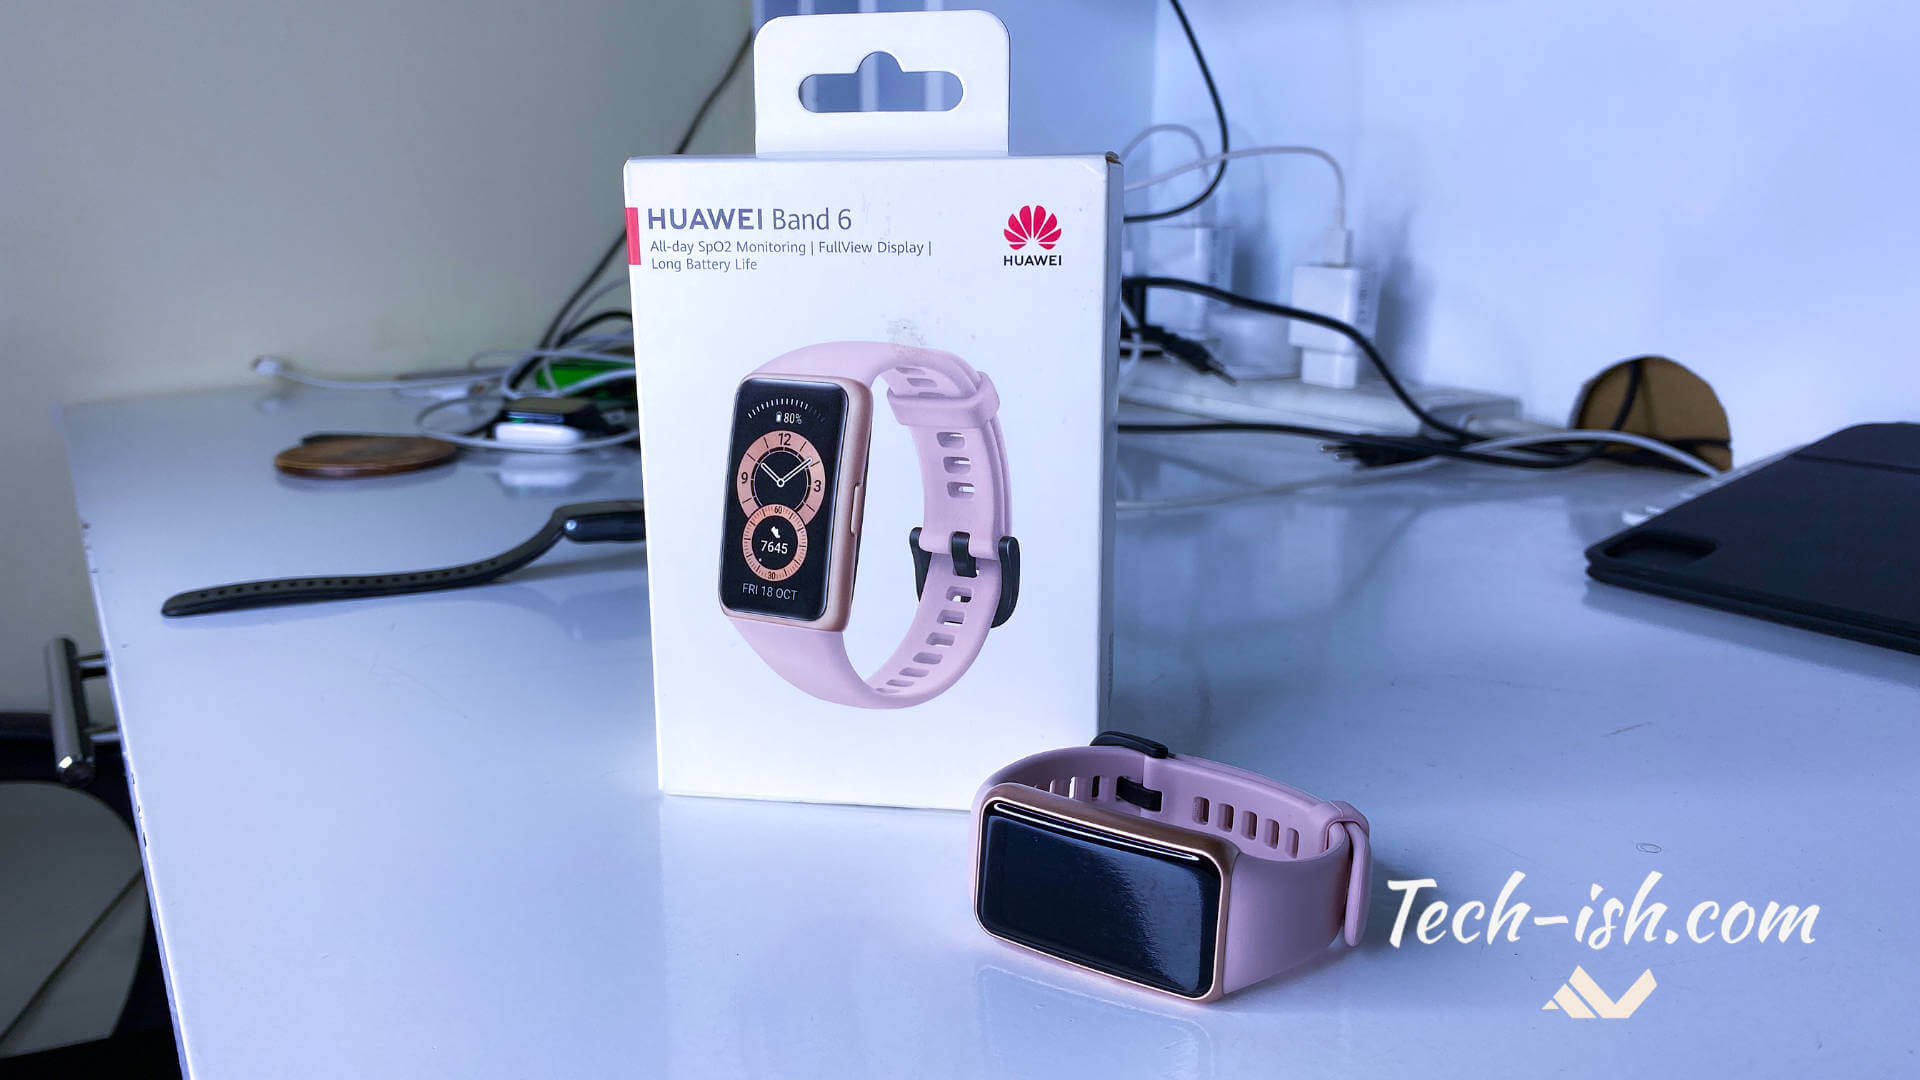 Huawei Band 6 launching in Kenya soon promising 2 weeks battery